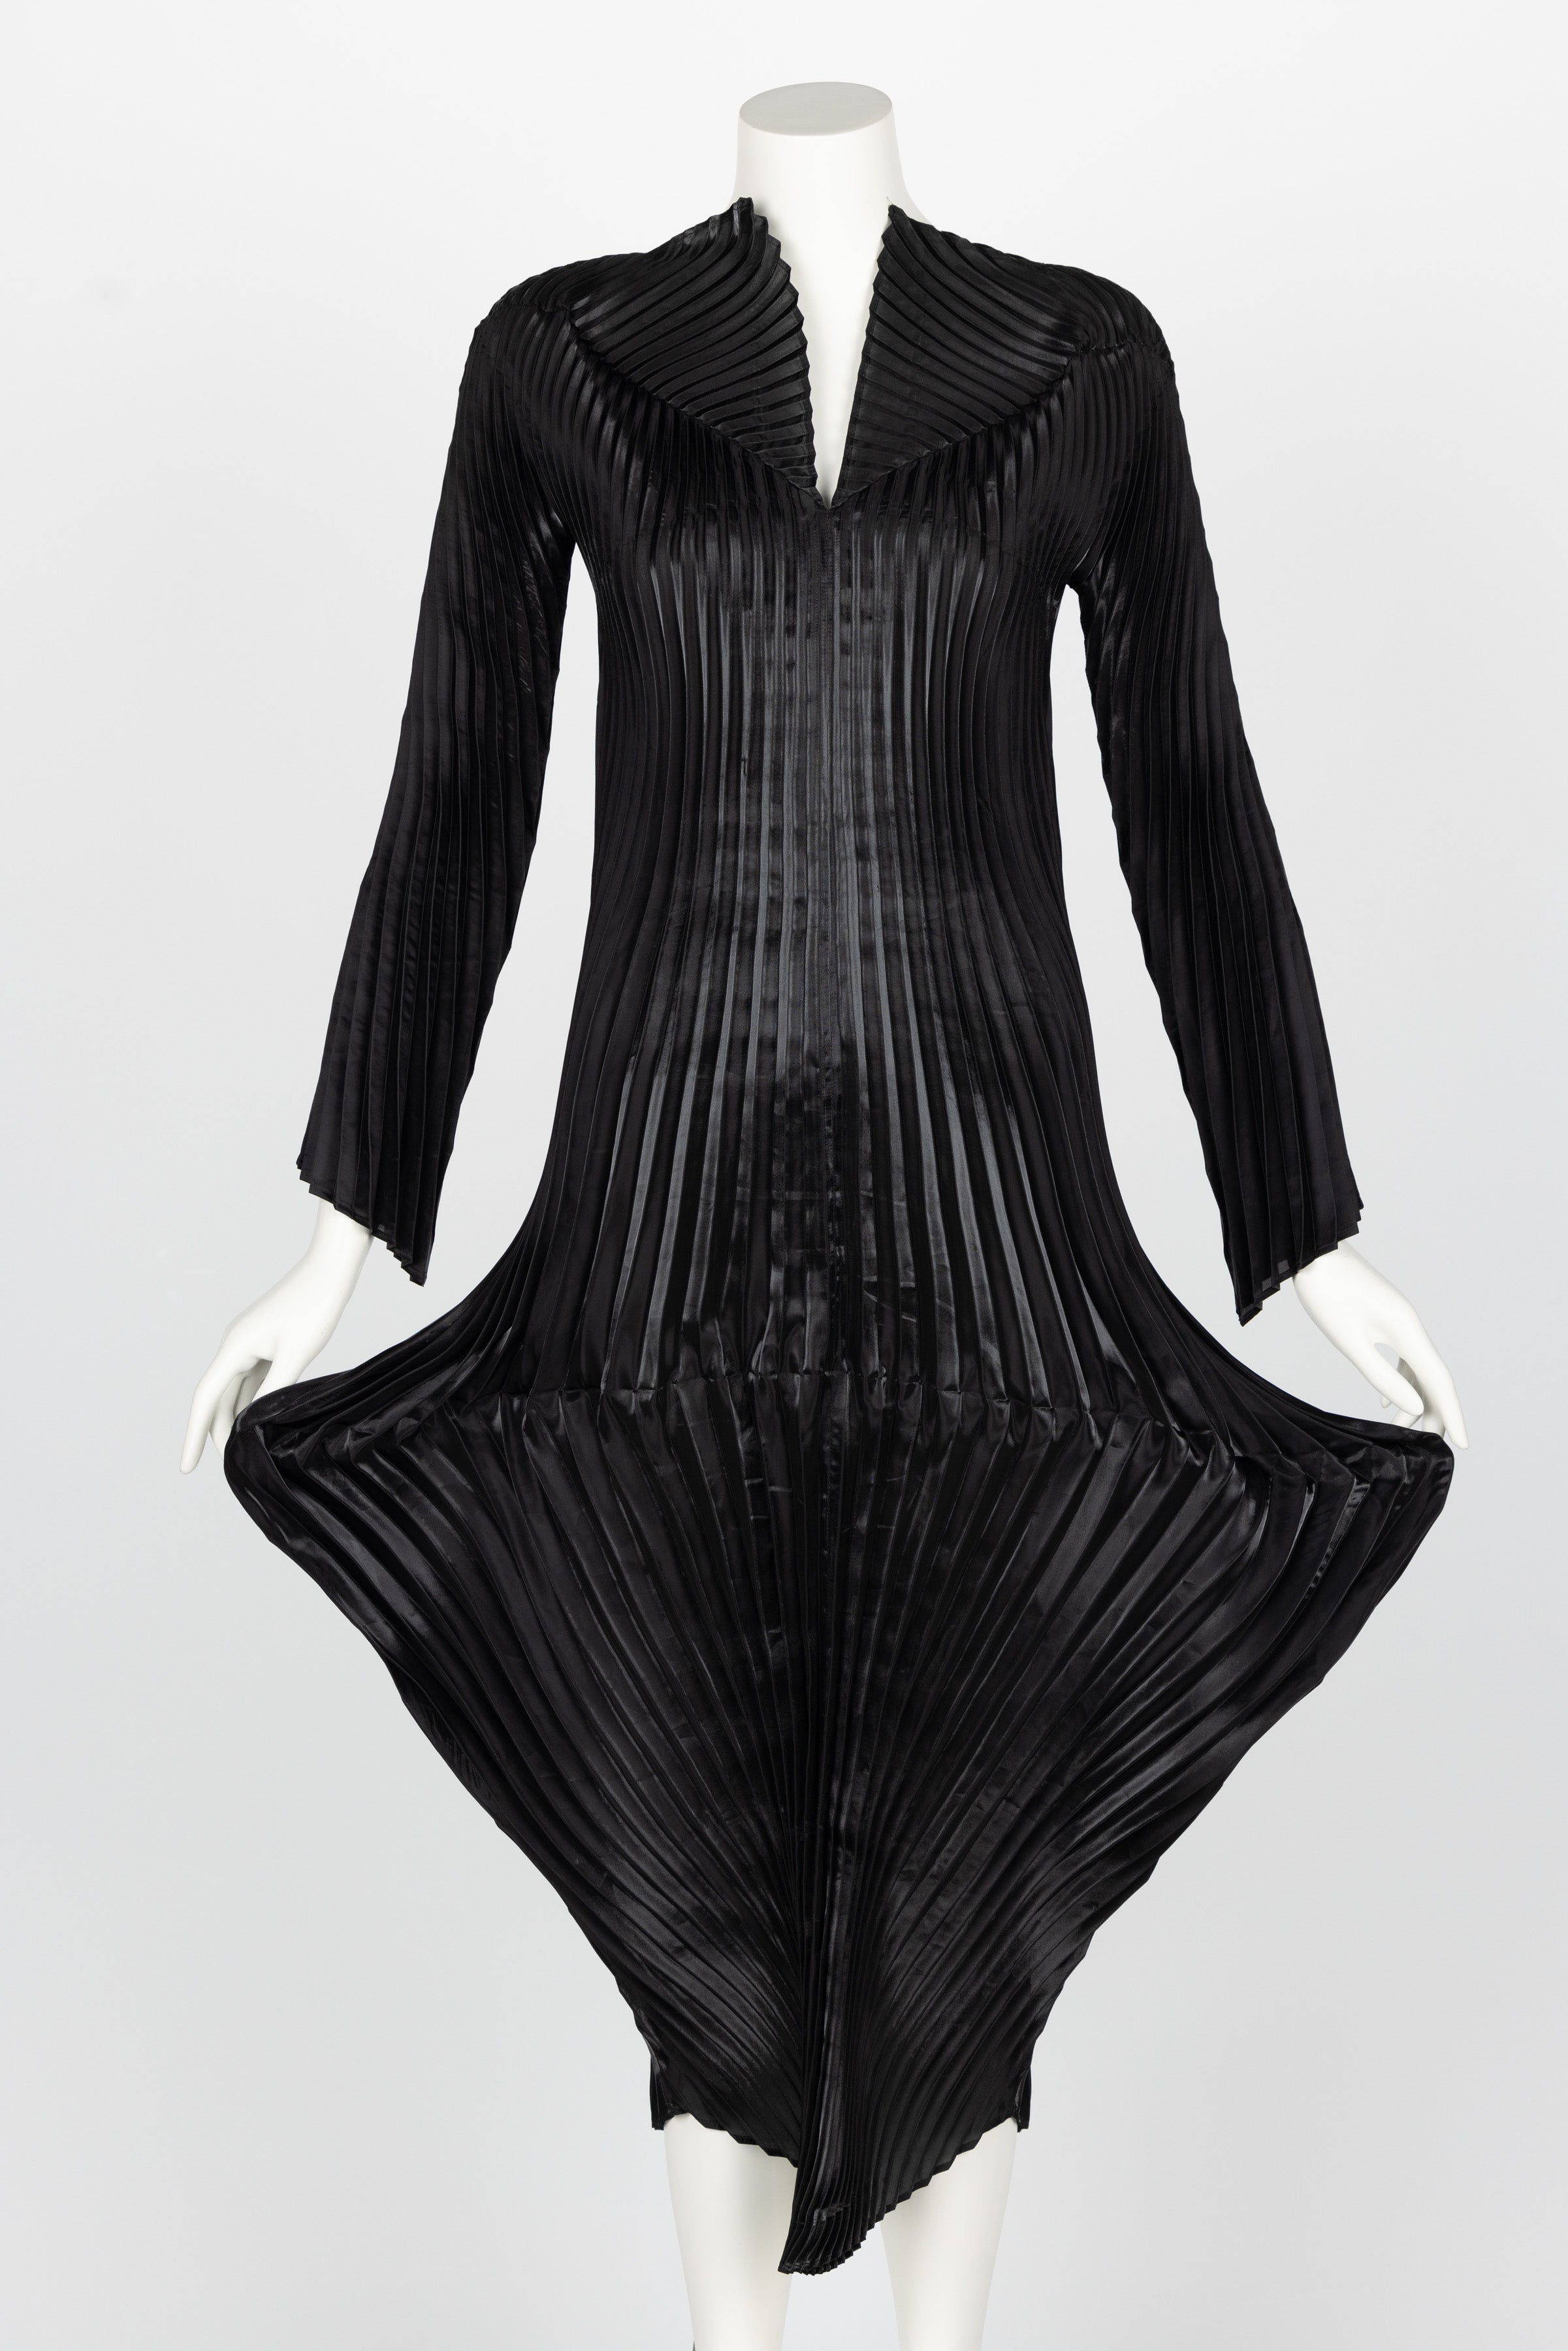 Women's Collectors Issey Miyake Fall 1999 Documented Metallic Black Dress